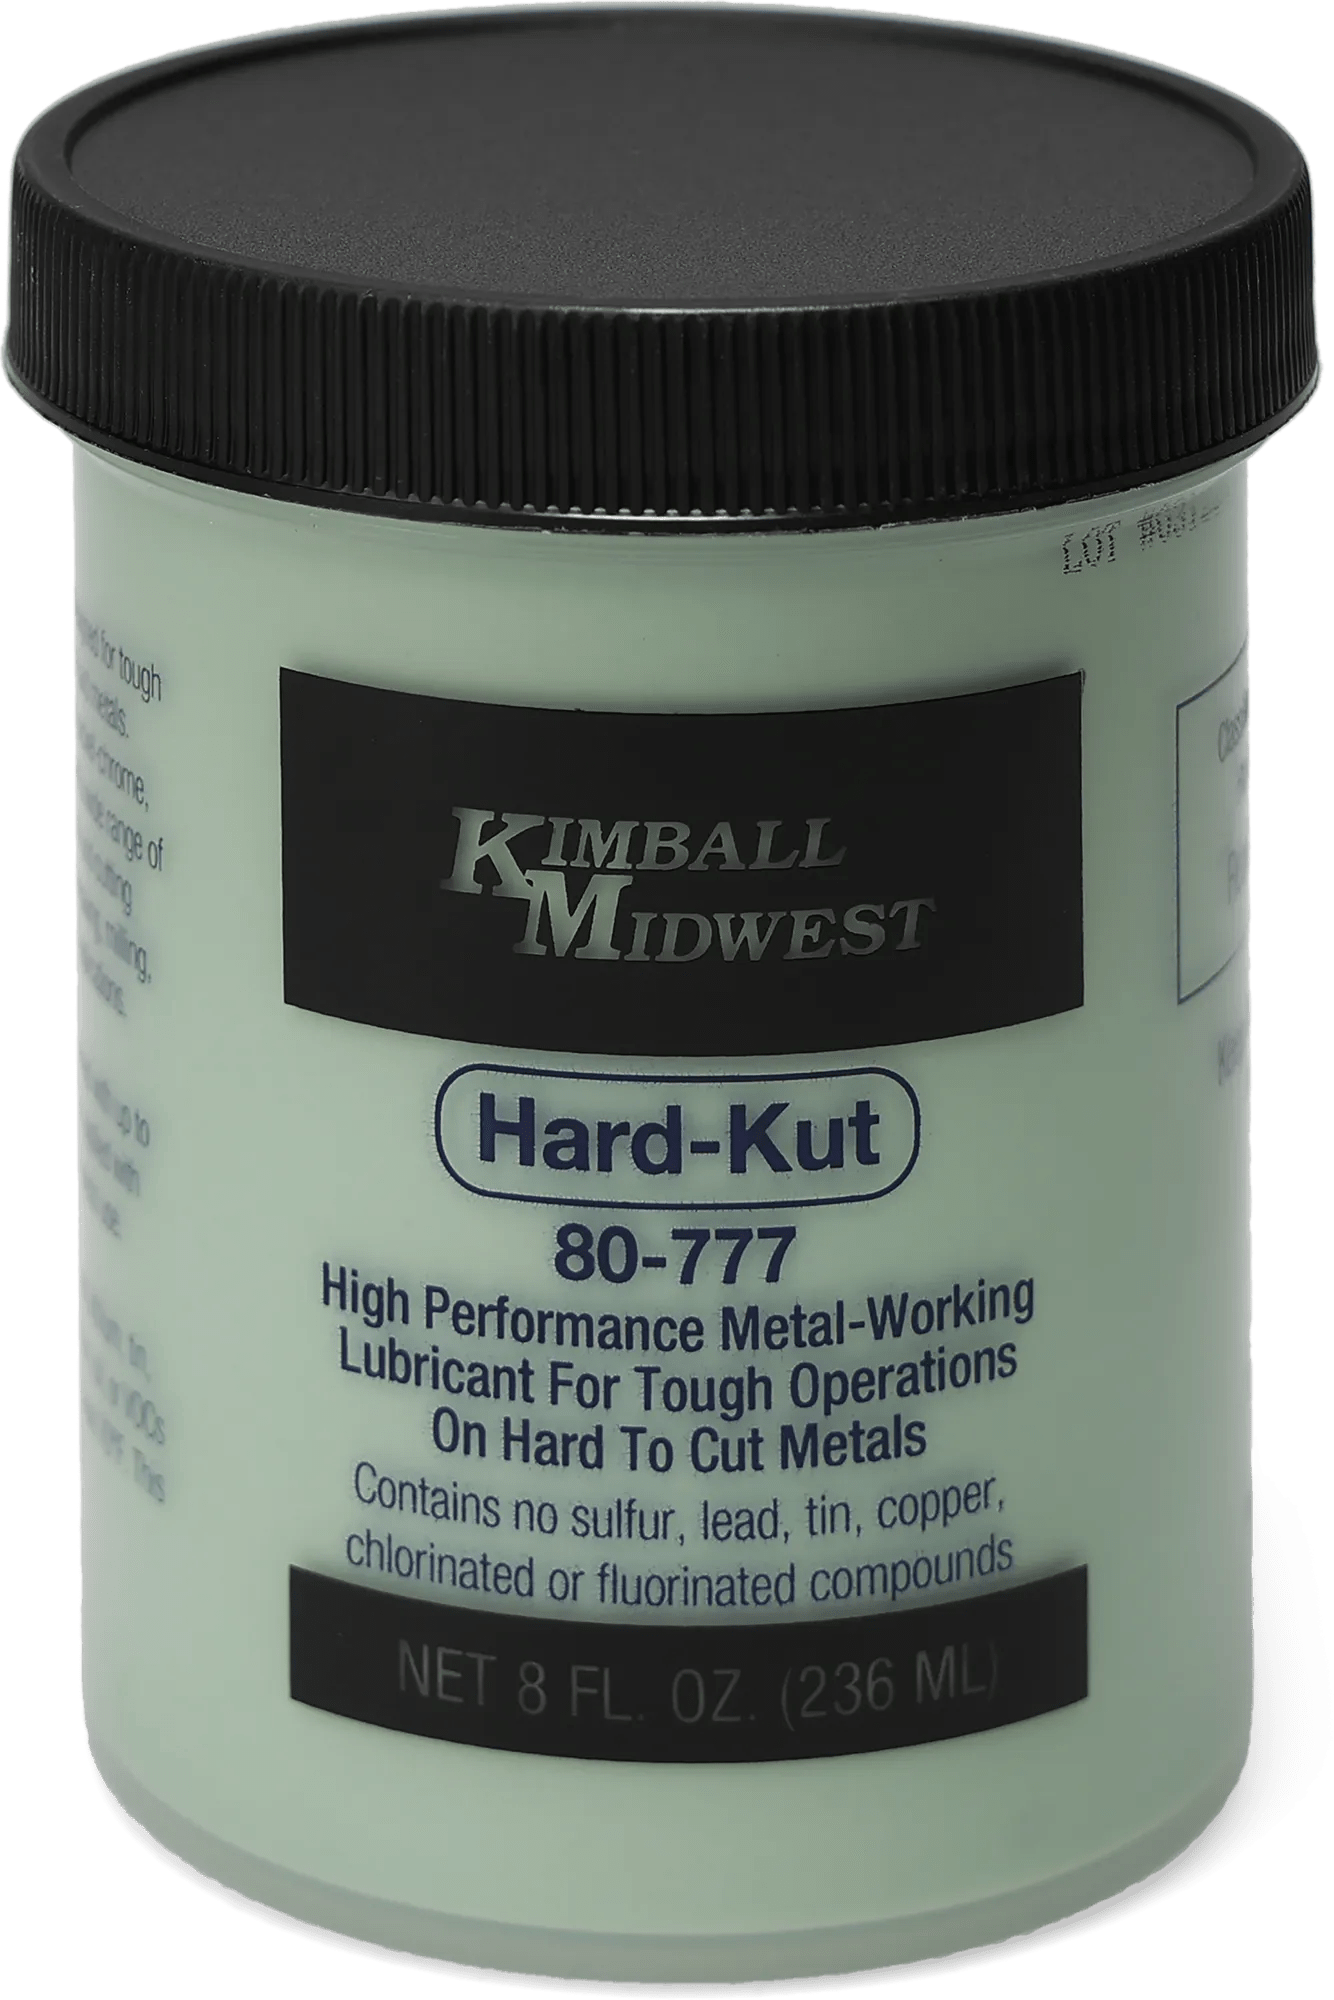 Hard-Kut Hi-Performance Metal-Working Lubricant - Wide Mouth Jar - Bulk